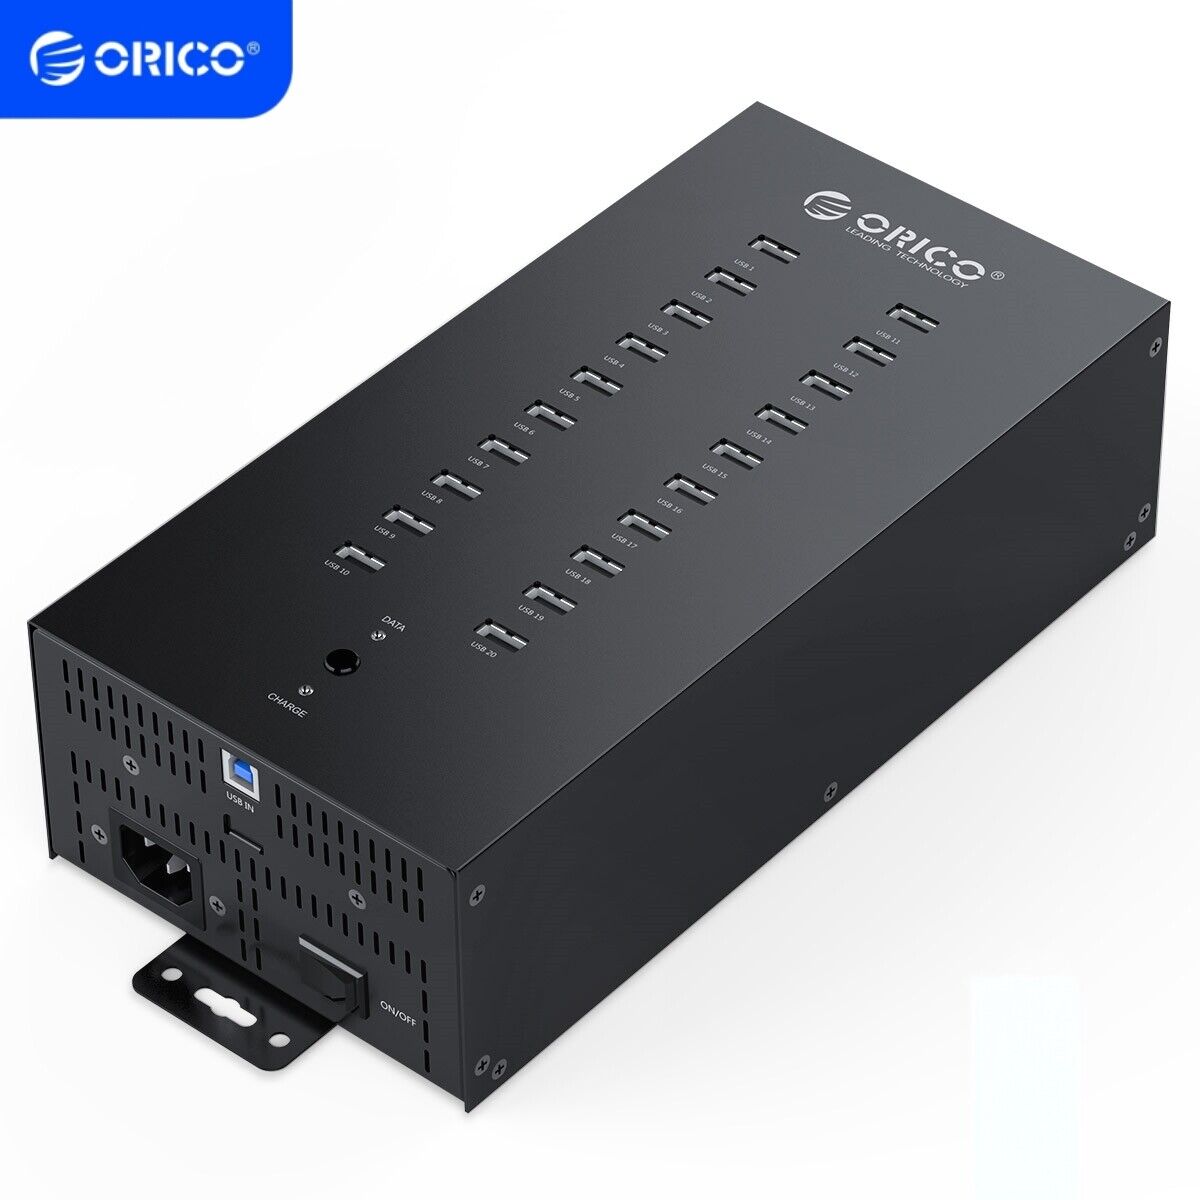 ORICO USB 2.0 Hub 20 Ports Mountable 150W Powered Industrial Grade USB 2.0 Hub